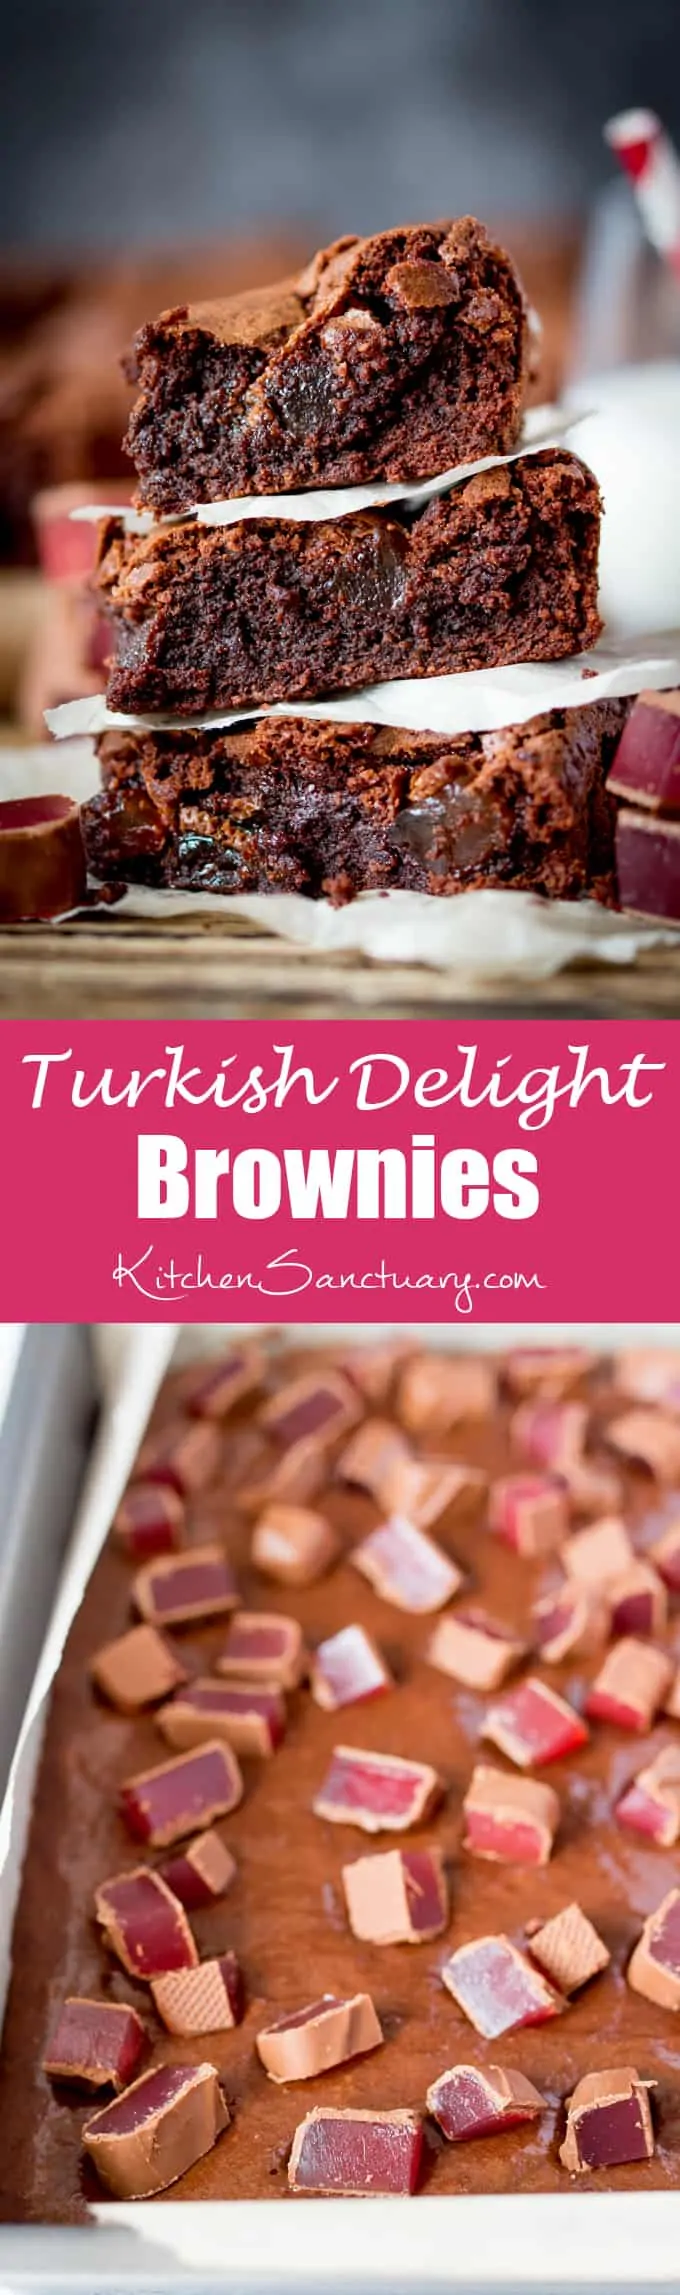 Turkish Delight Brownies - squidgy chocolate brownies with a crisp, meringue-like top, stuffed with chunks of chocolate-covered Turkish delight.